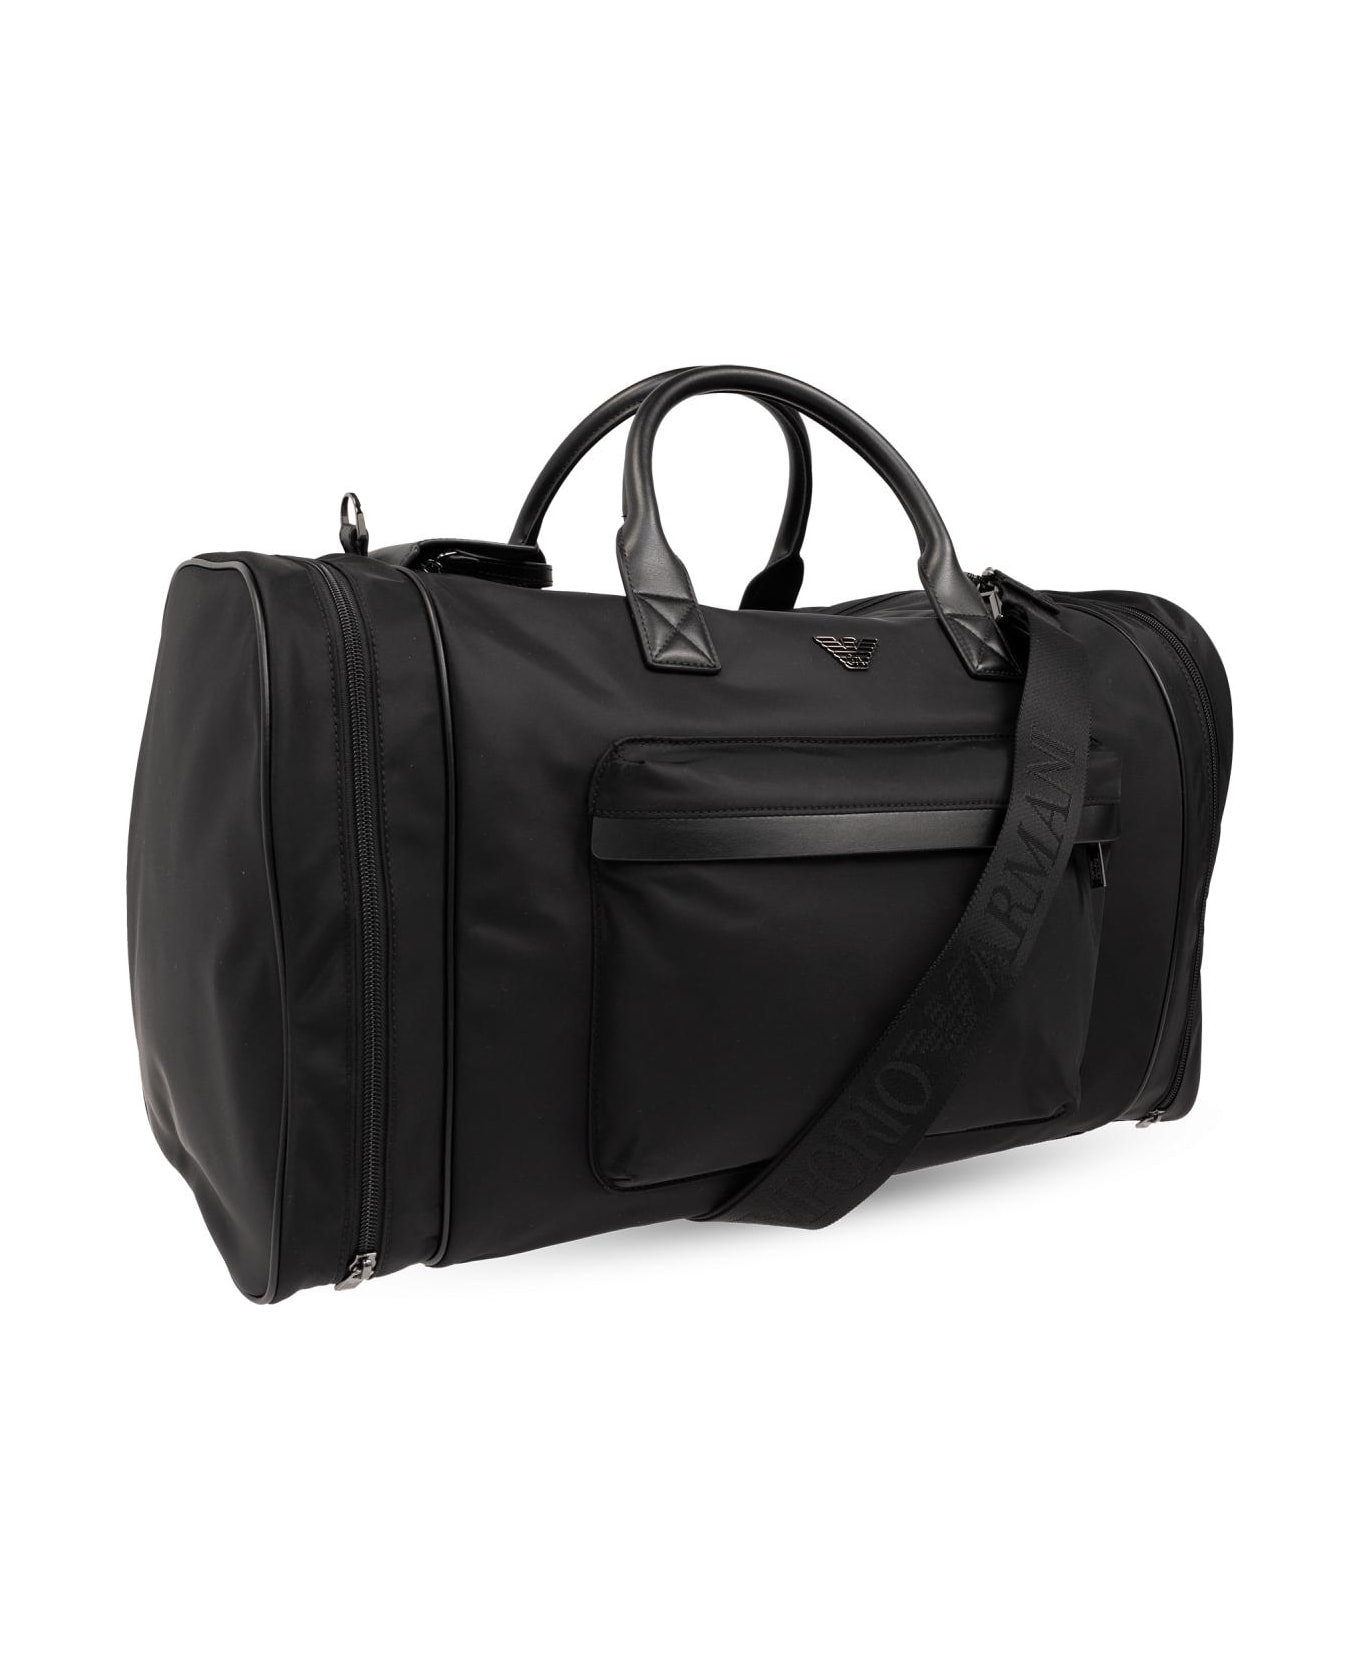 Emporio Armani 'sustainability' Collection Travel Bag - Nero